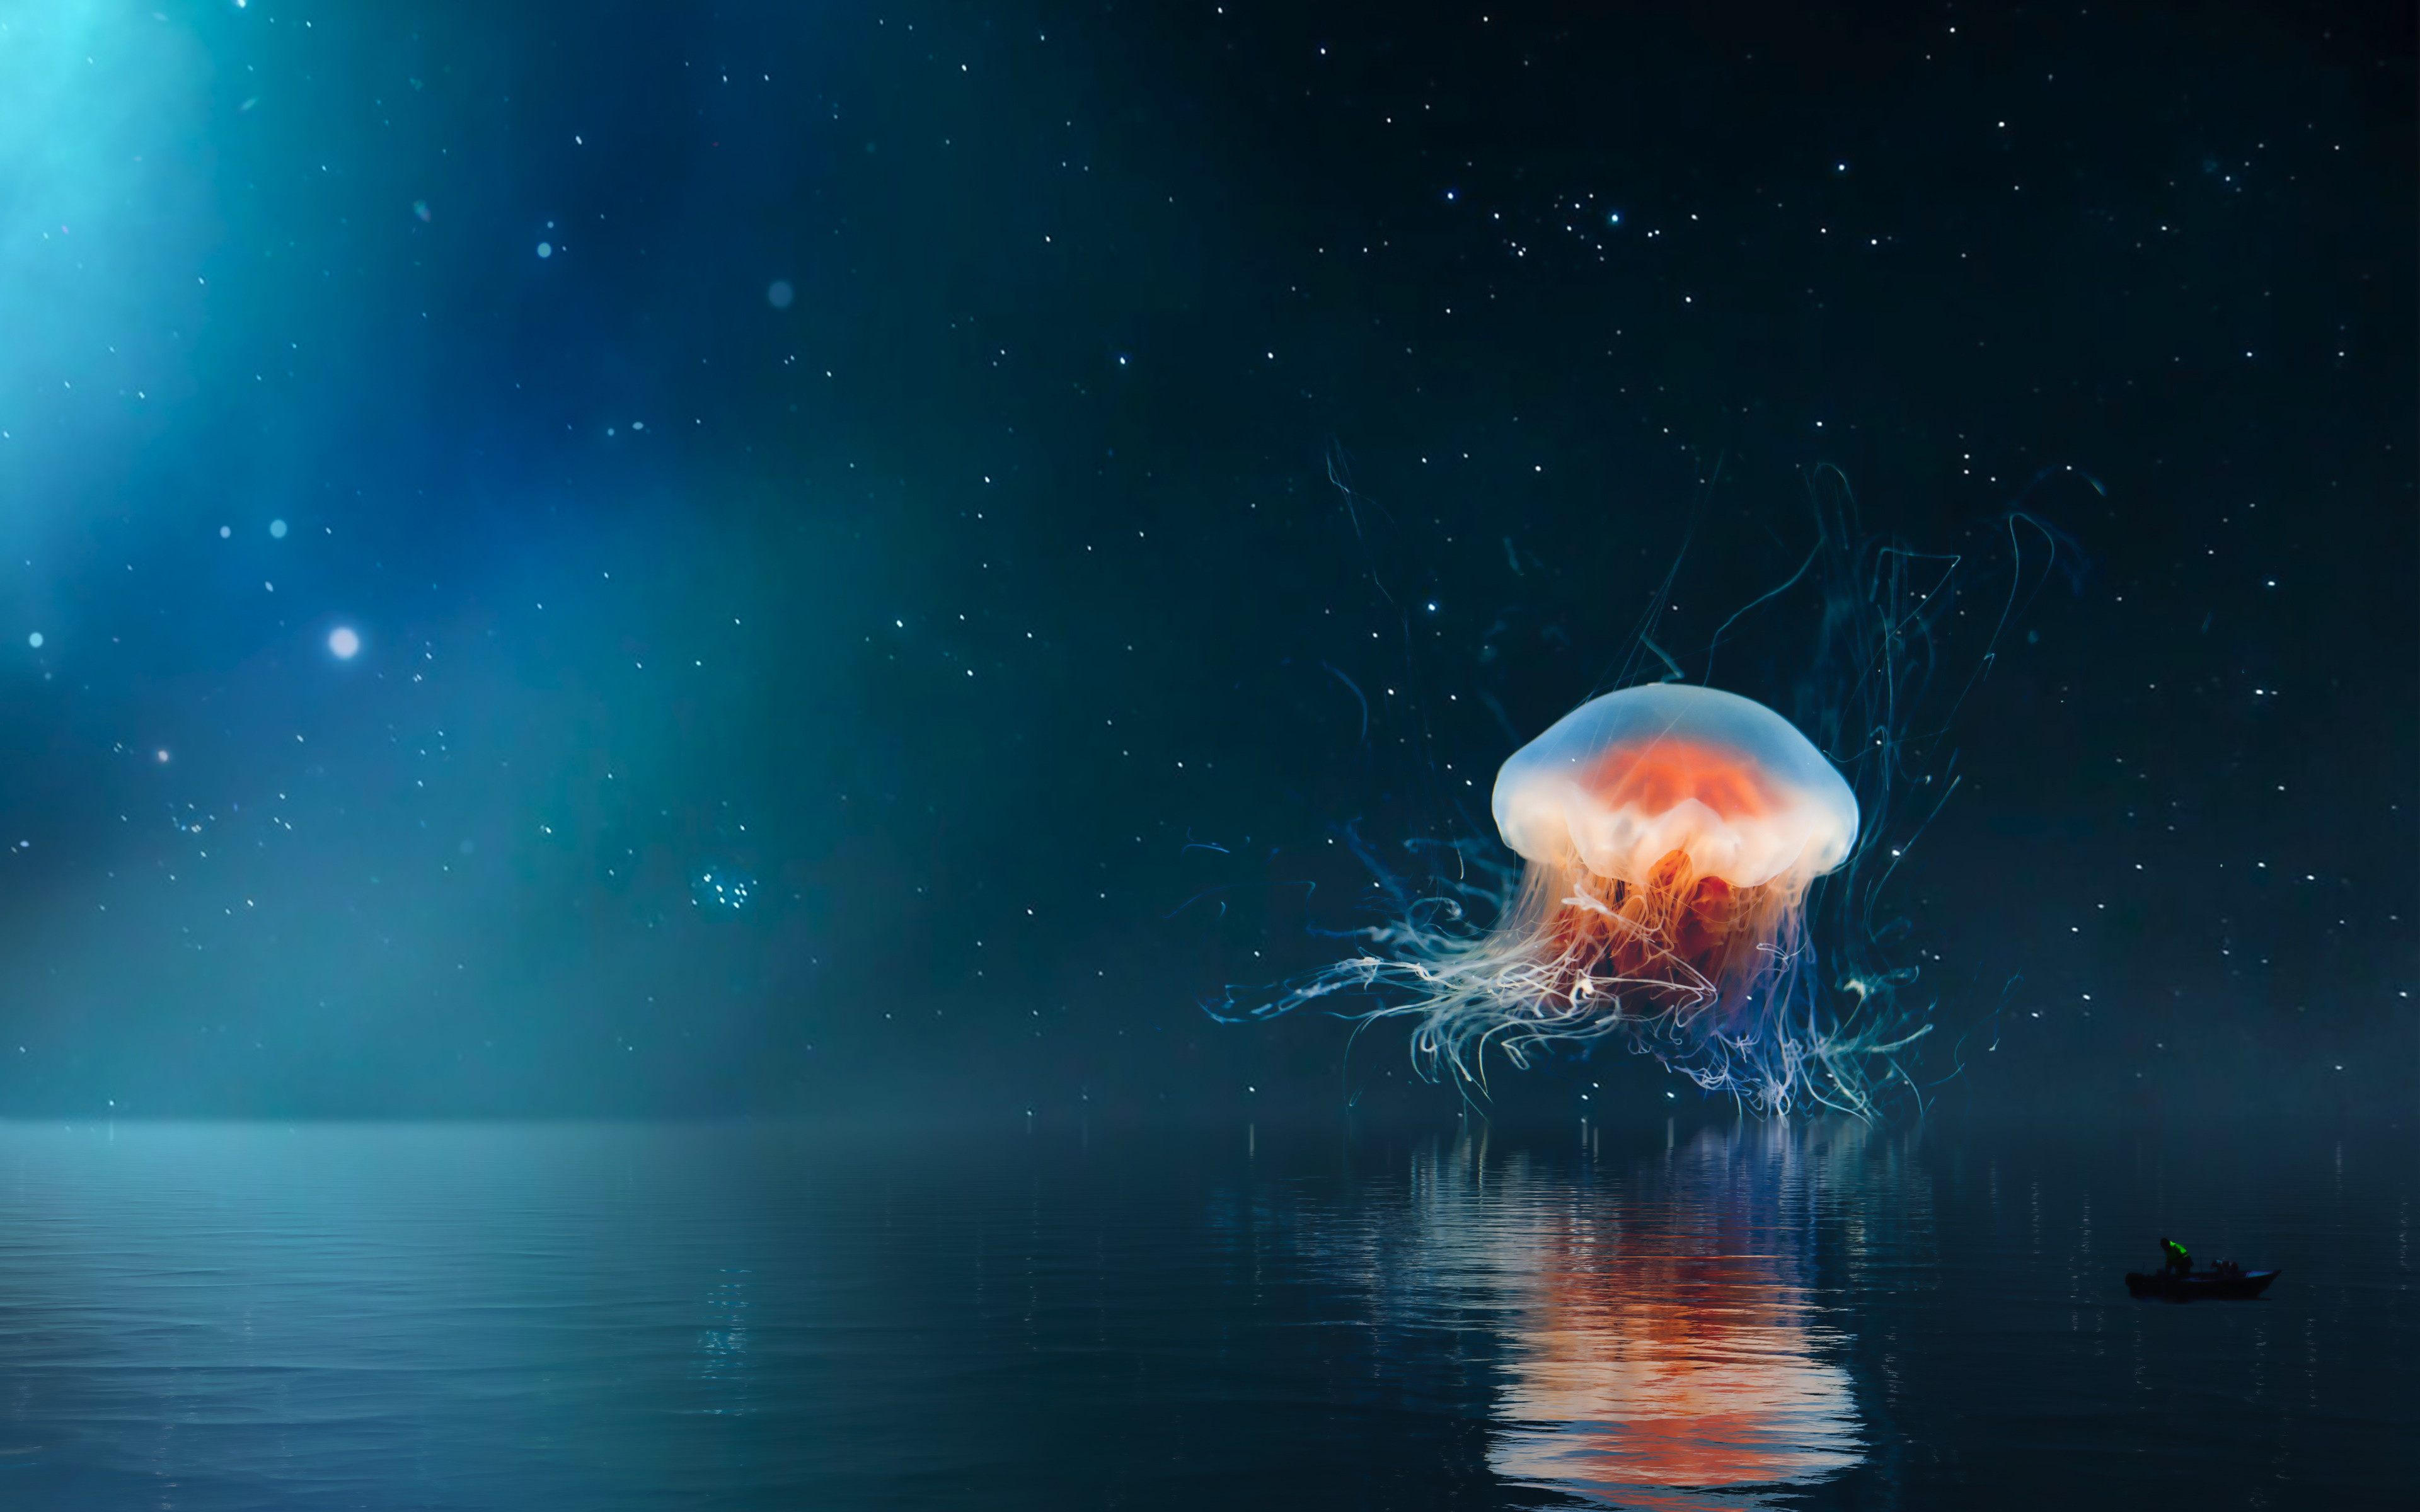 Jellyfish on the night sky wallpaper 3840x2400